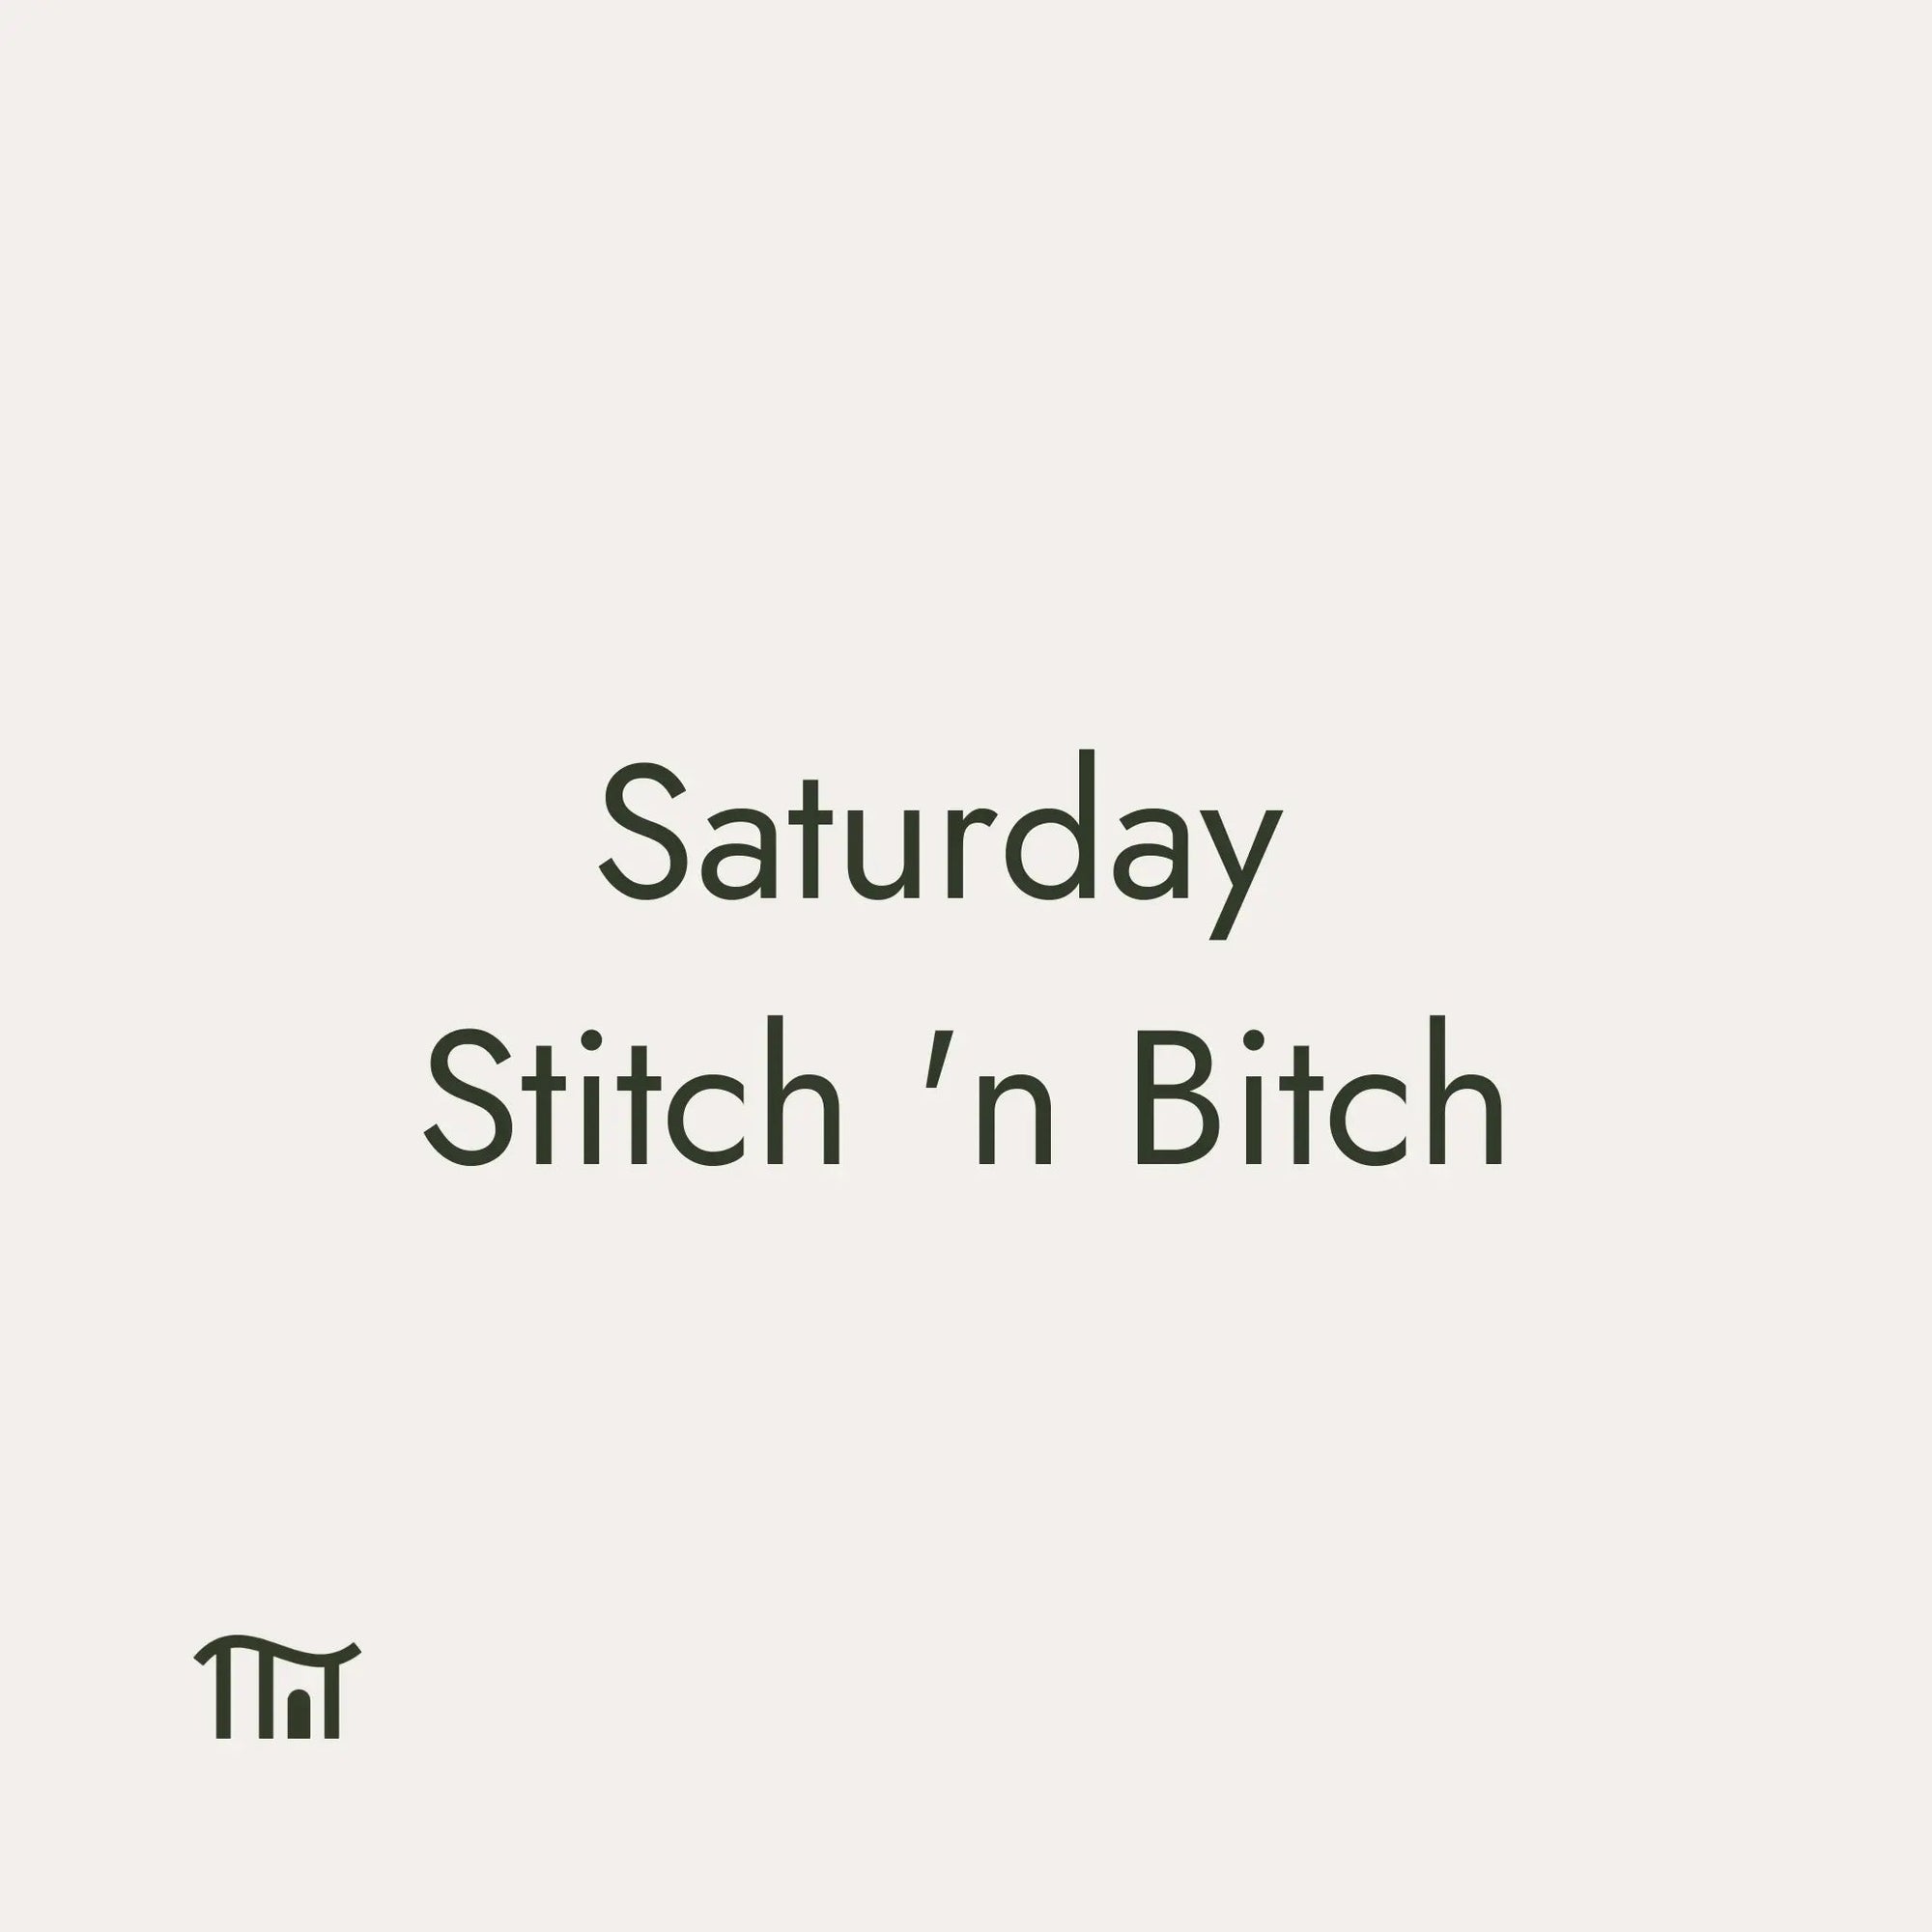 Saturday Stitch 'n Bitch - Events - The Little Yarn Store